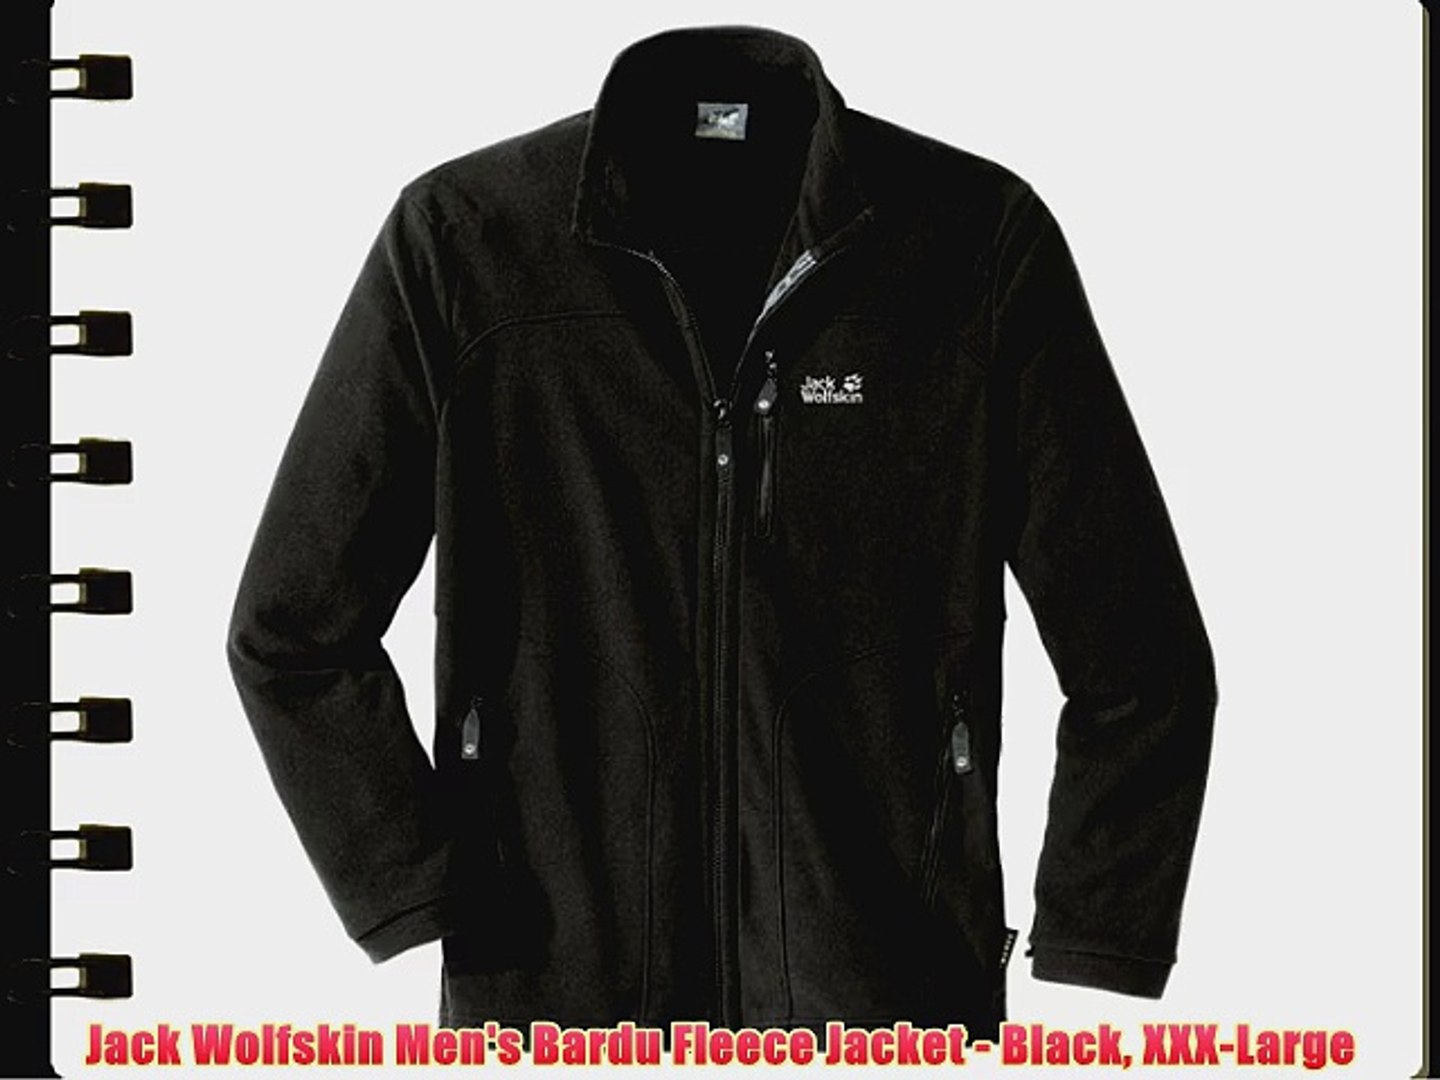 Jack Wolfskin Men's Bardu Fleece Jacket - Black XXX-Large - video  Dailymotion